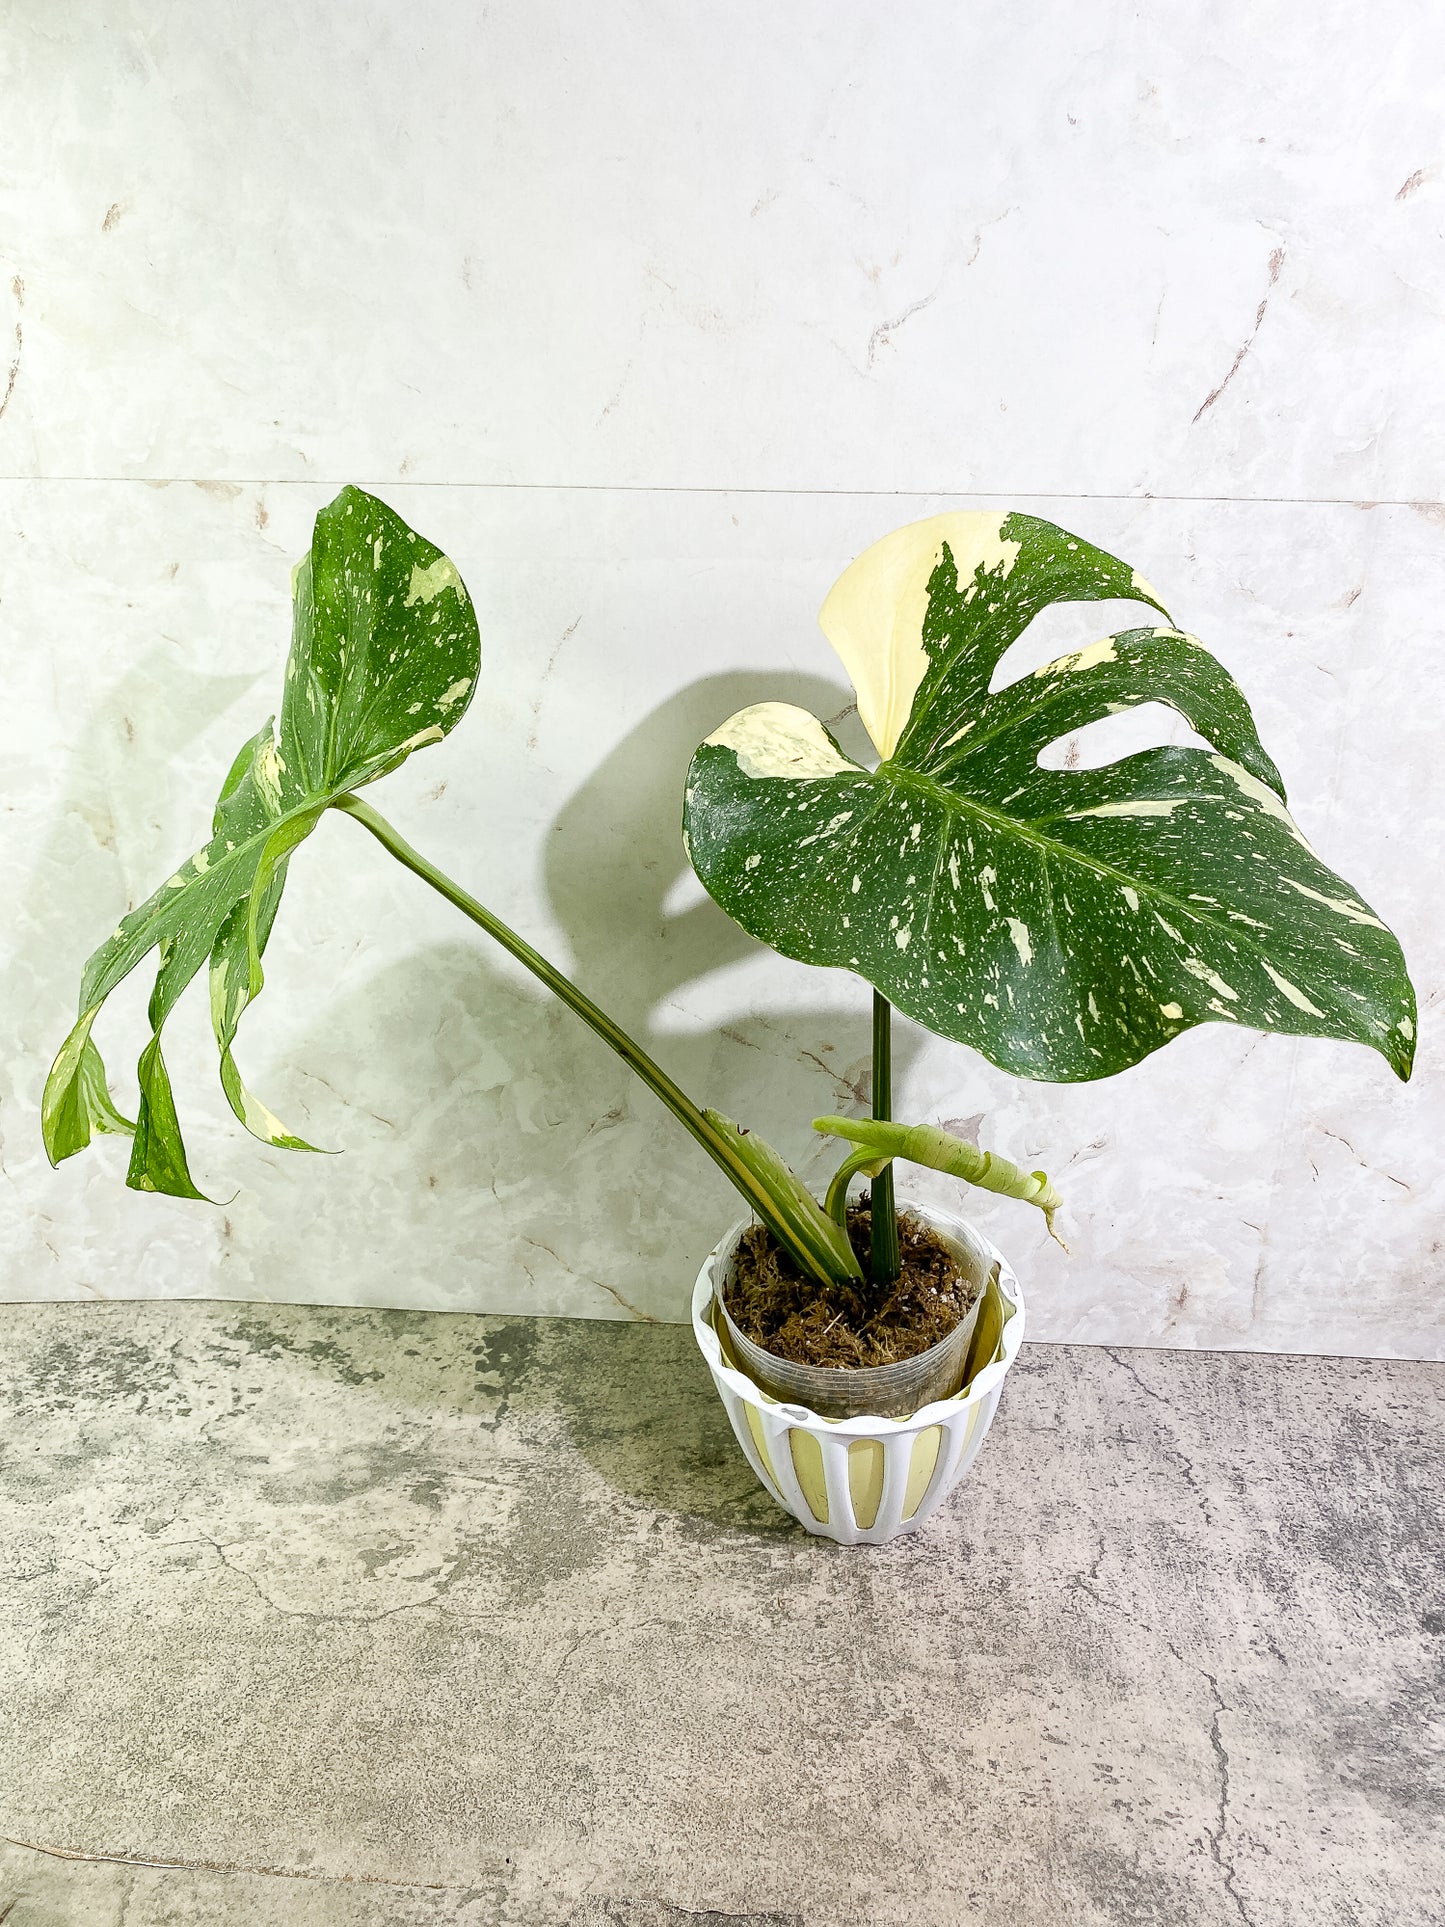 Monstera Thai Constellation 2 leaves & 1 unfurling leaf Slightly Rooted